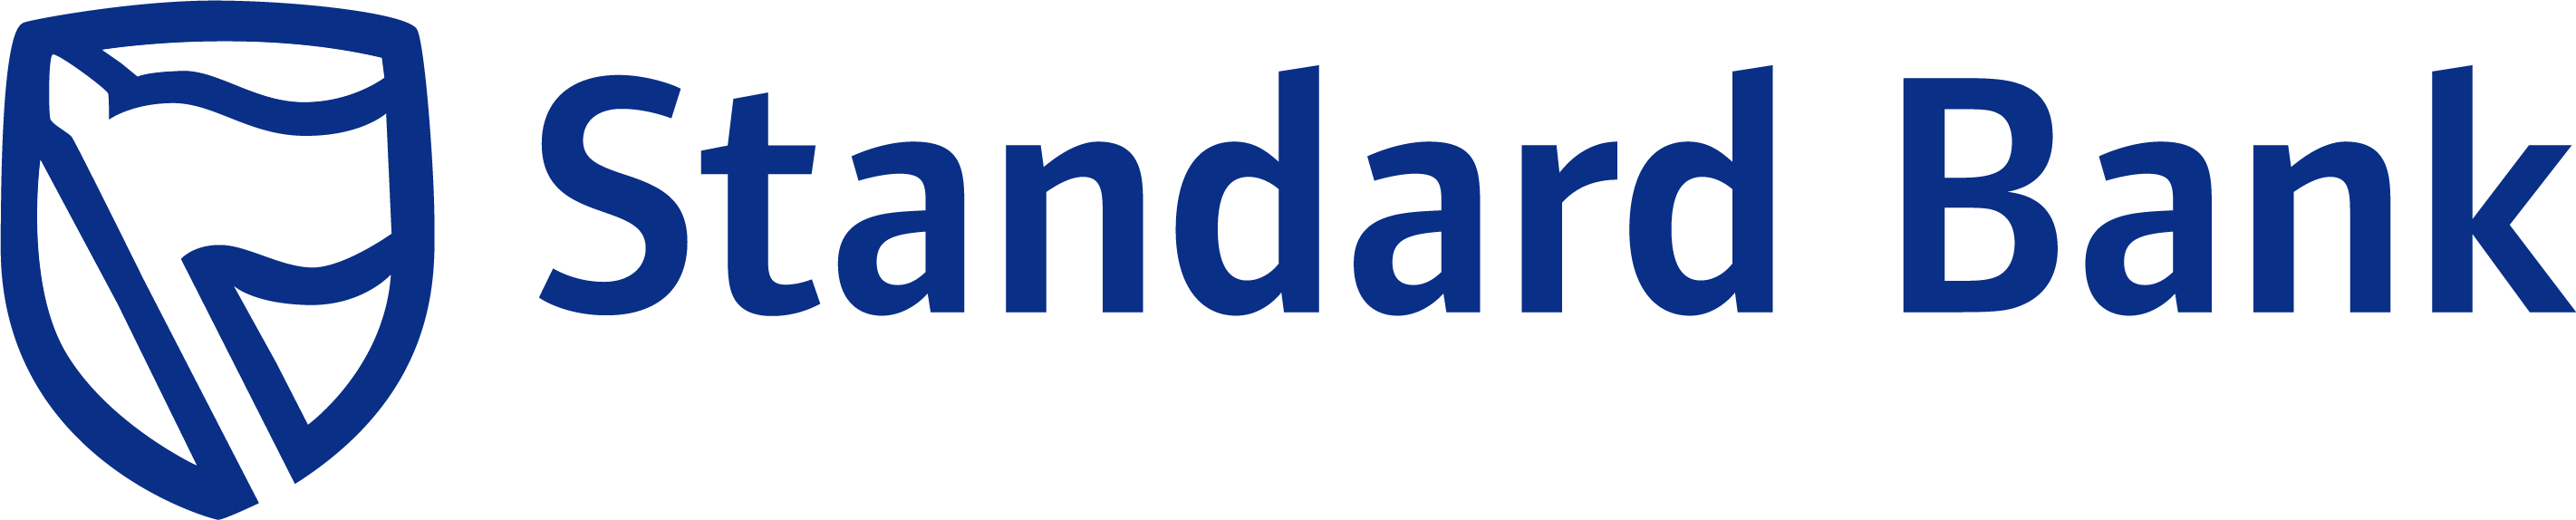 Standard Bank Logo png